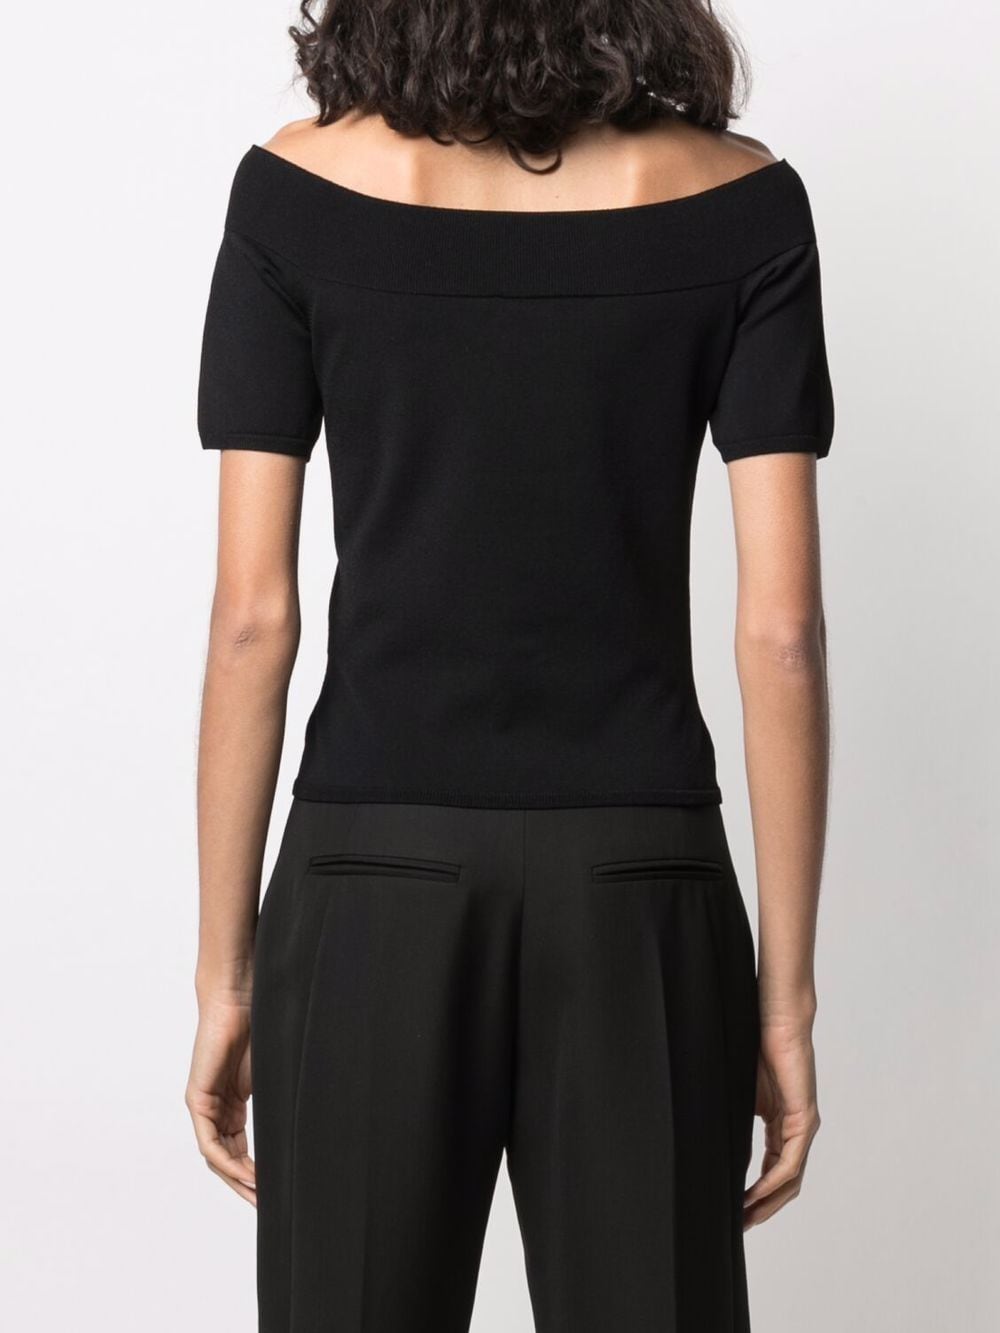 ALEXANDER MCQUEEN Stunning Off-Shoulder Black Knit Top for Women